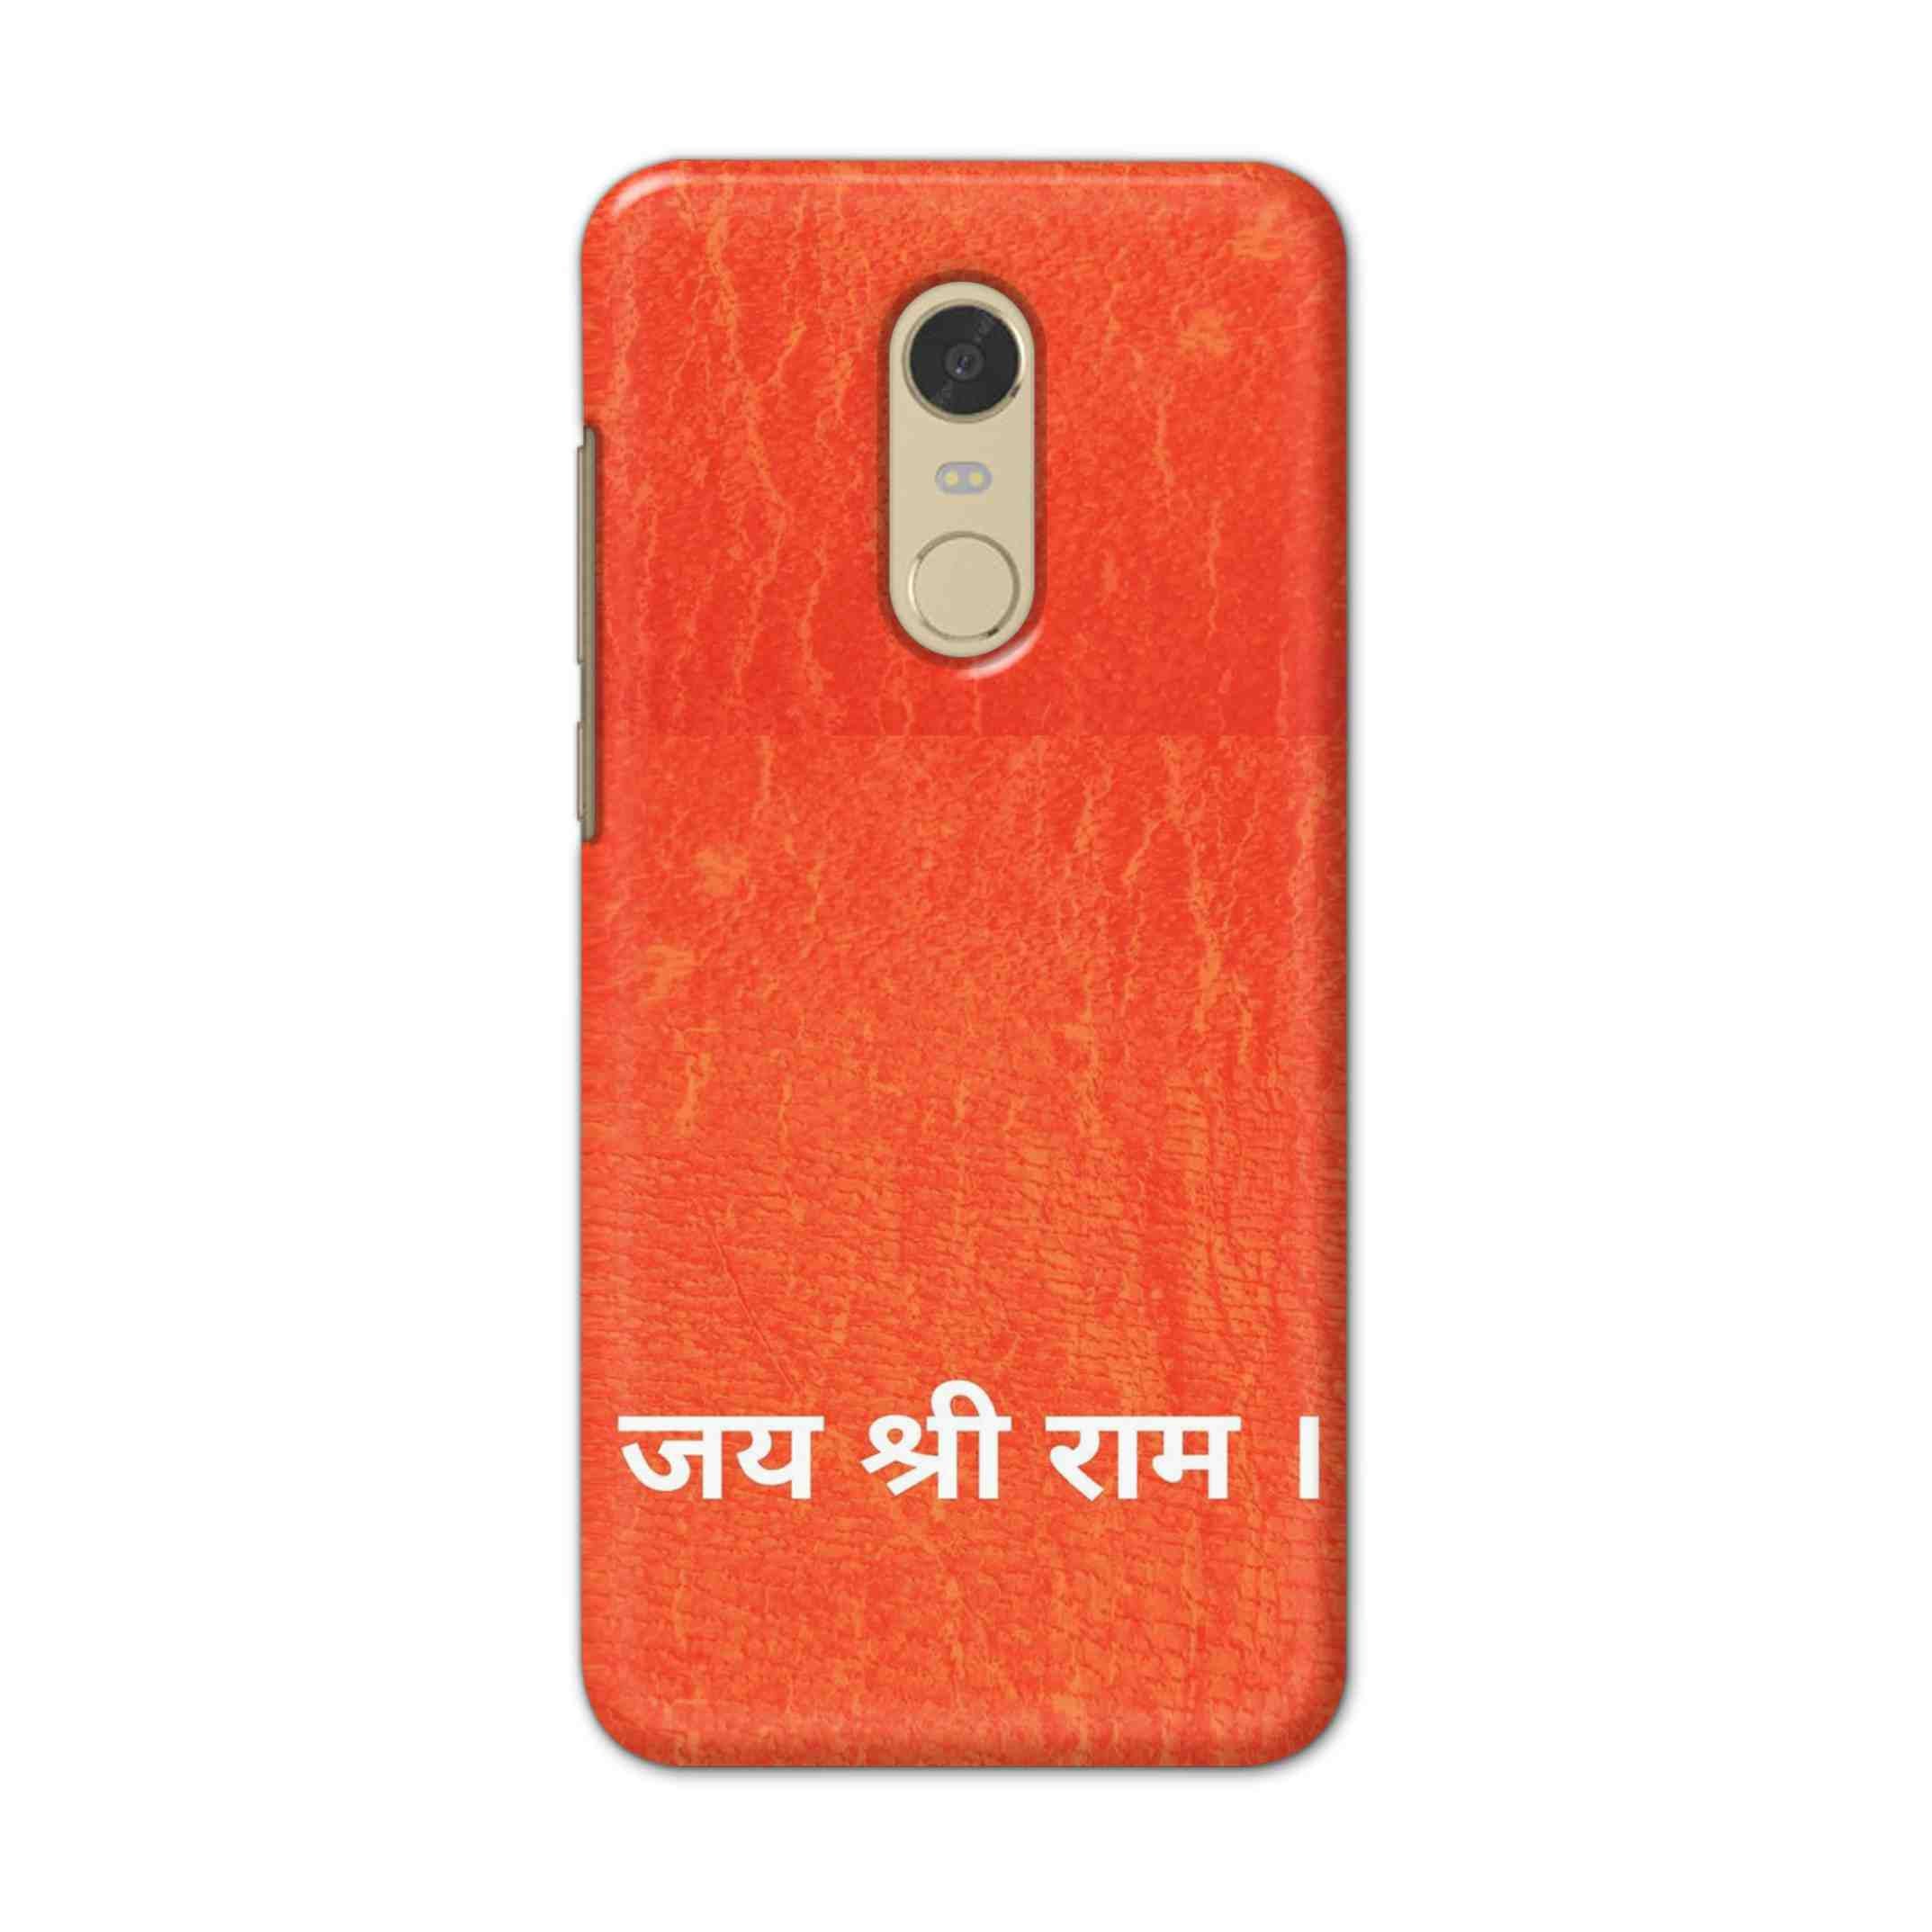 Buy Jai Shree Ram Hard Back Mobile Phone Case/Cover For Redmi Note 6 Online